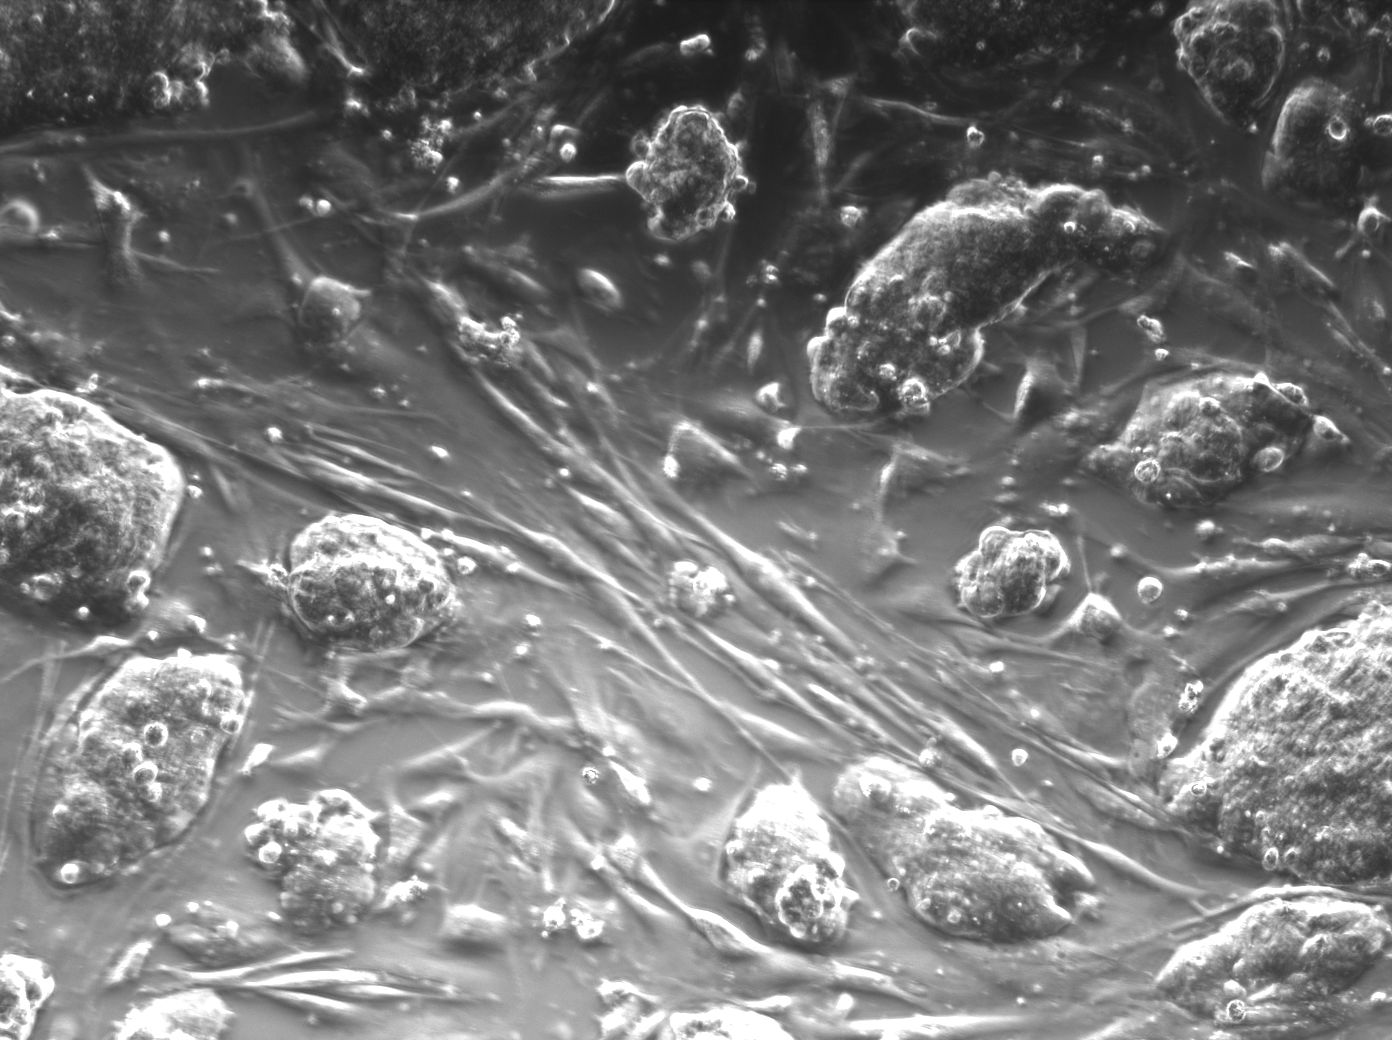 murine embryonic stem cells